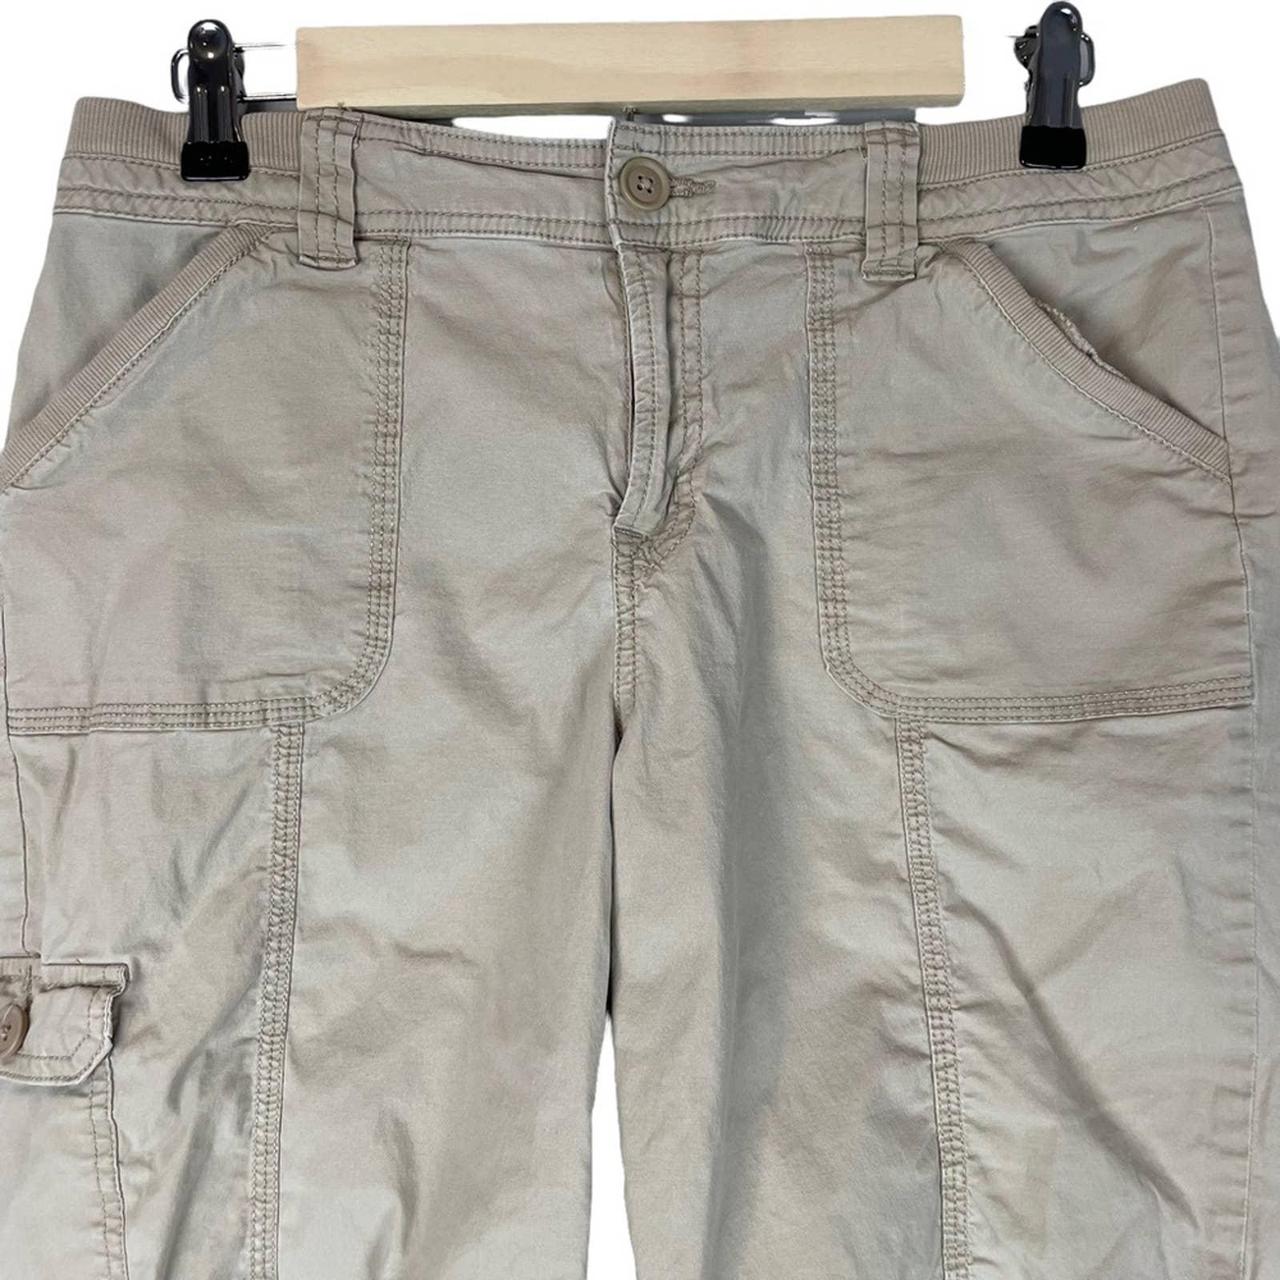 Y2K St Johns Bay khaki cargo shorts with drawstring... - Depop